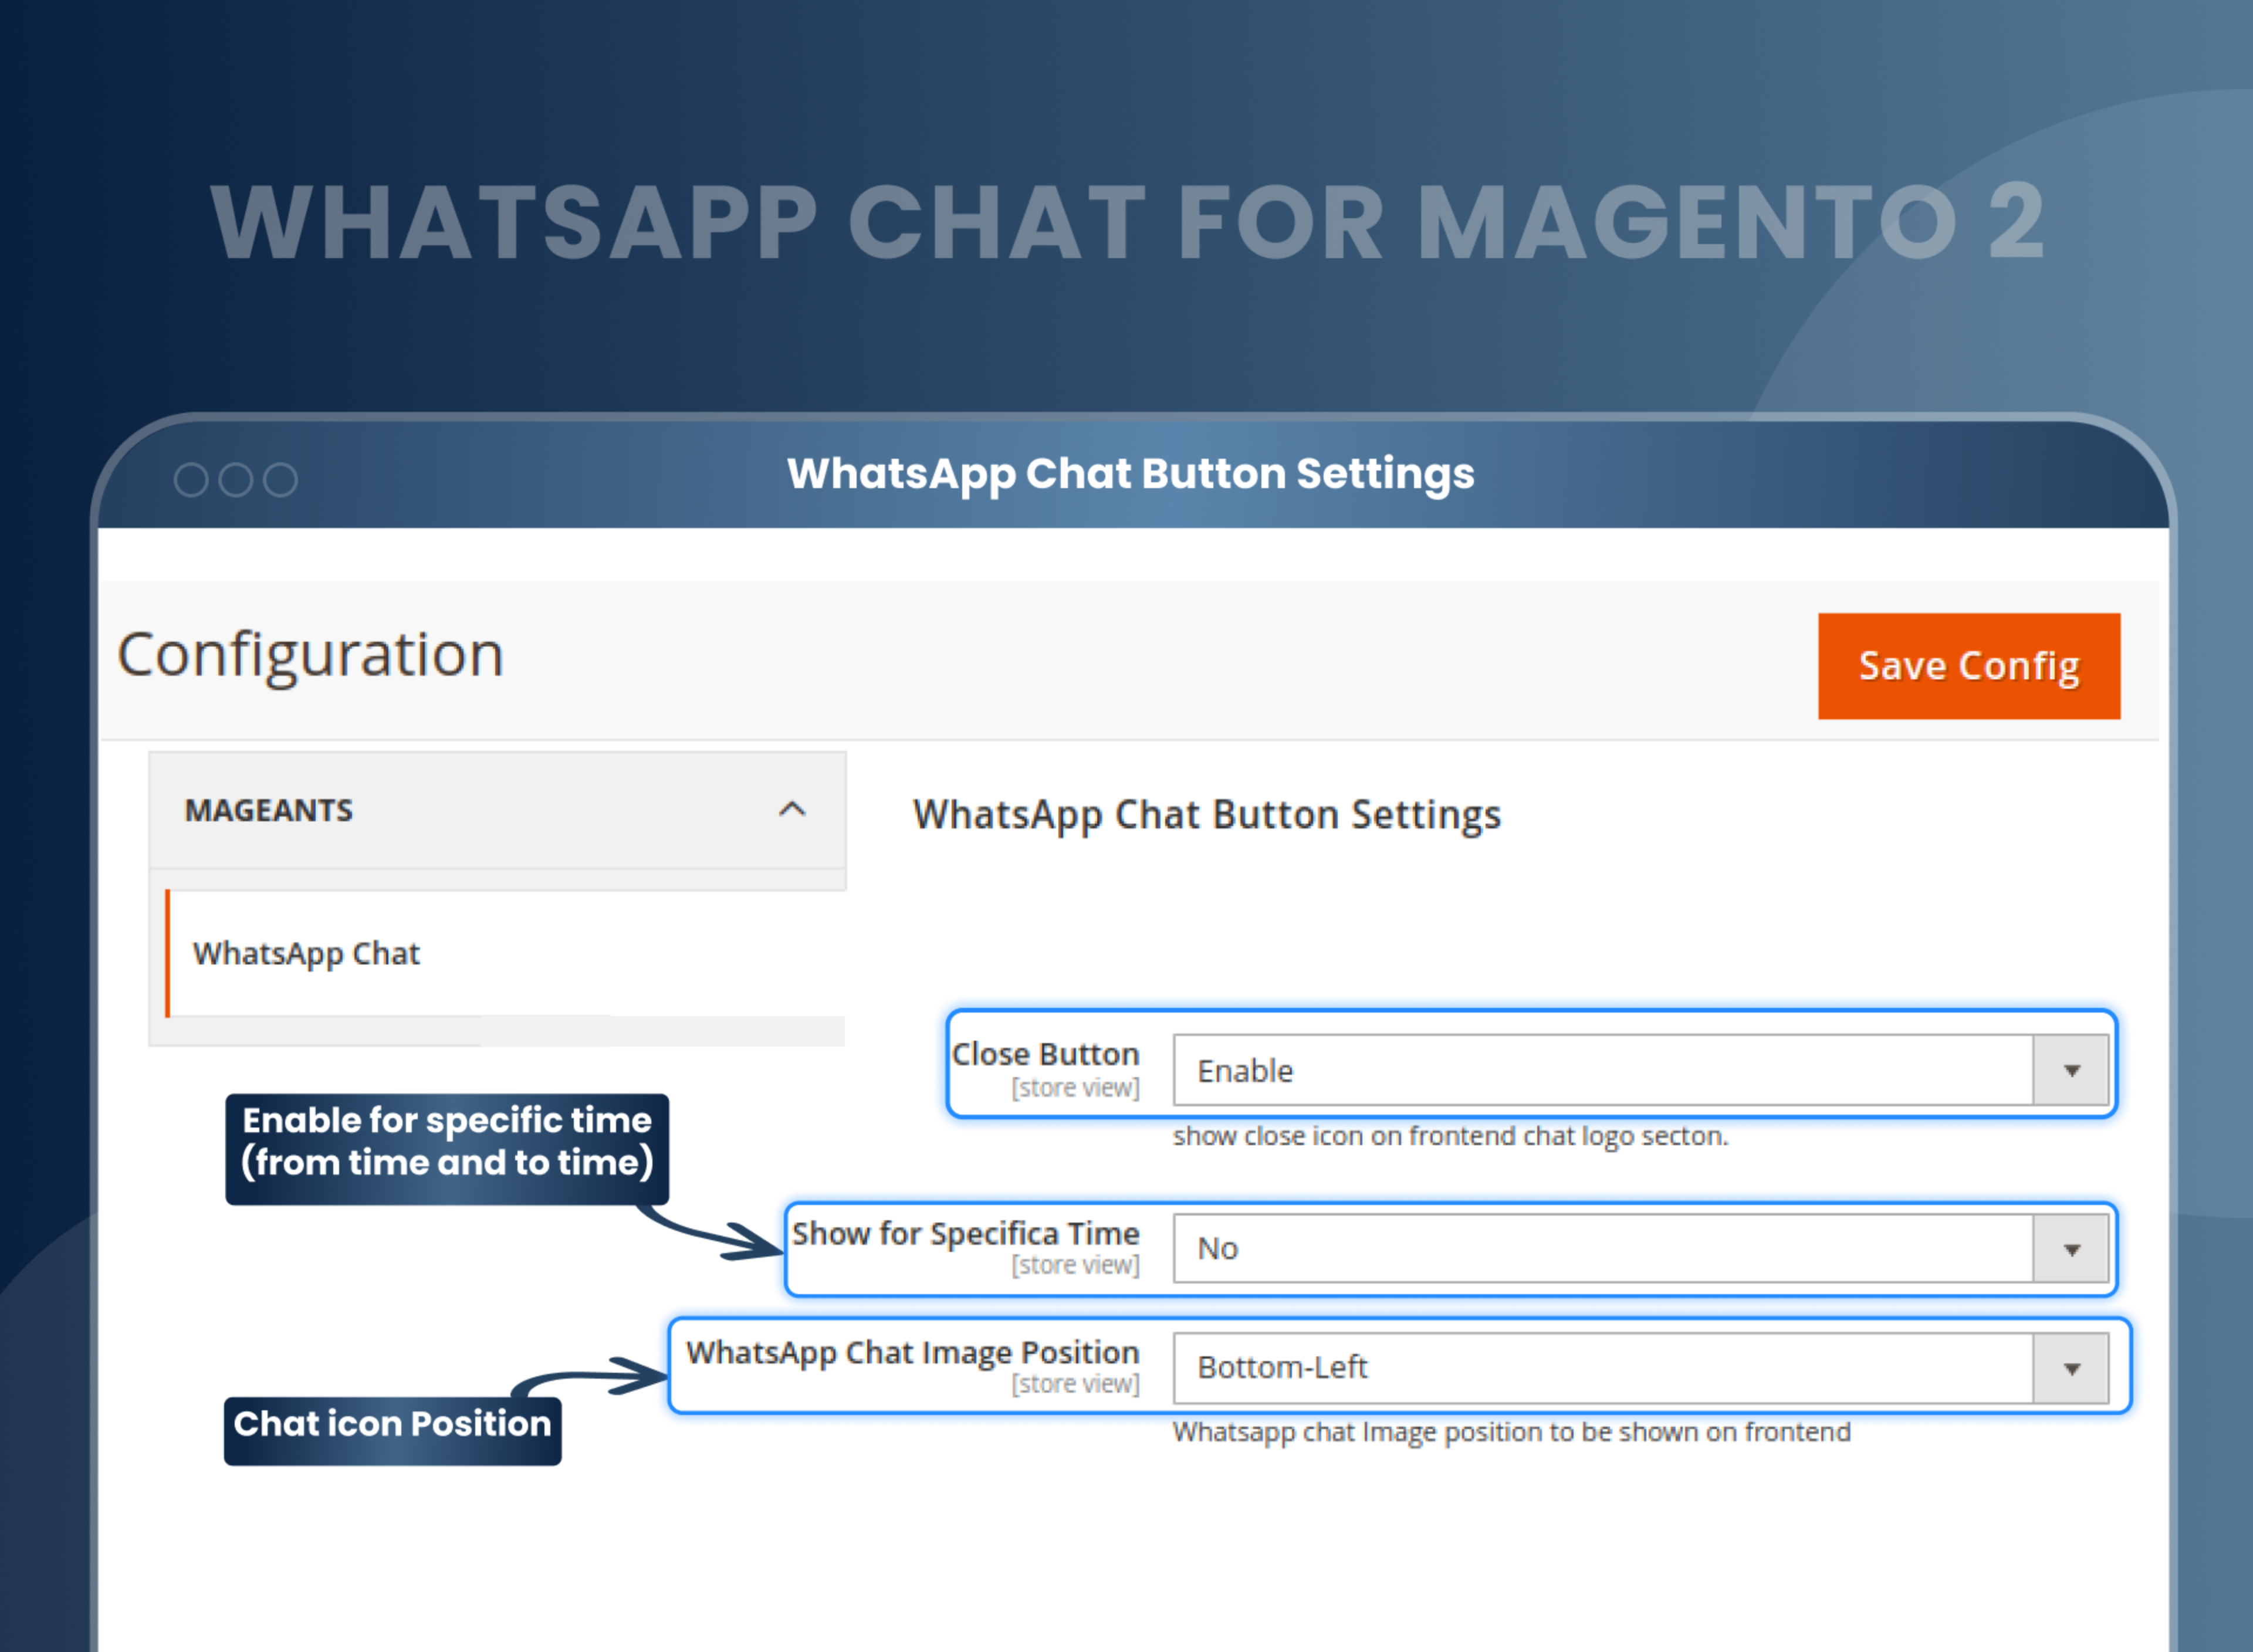 WhatsApp Chat Button Settings